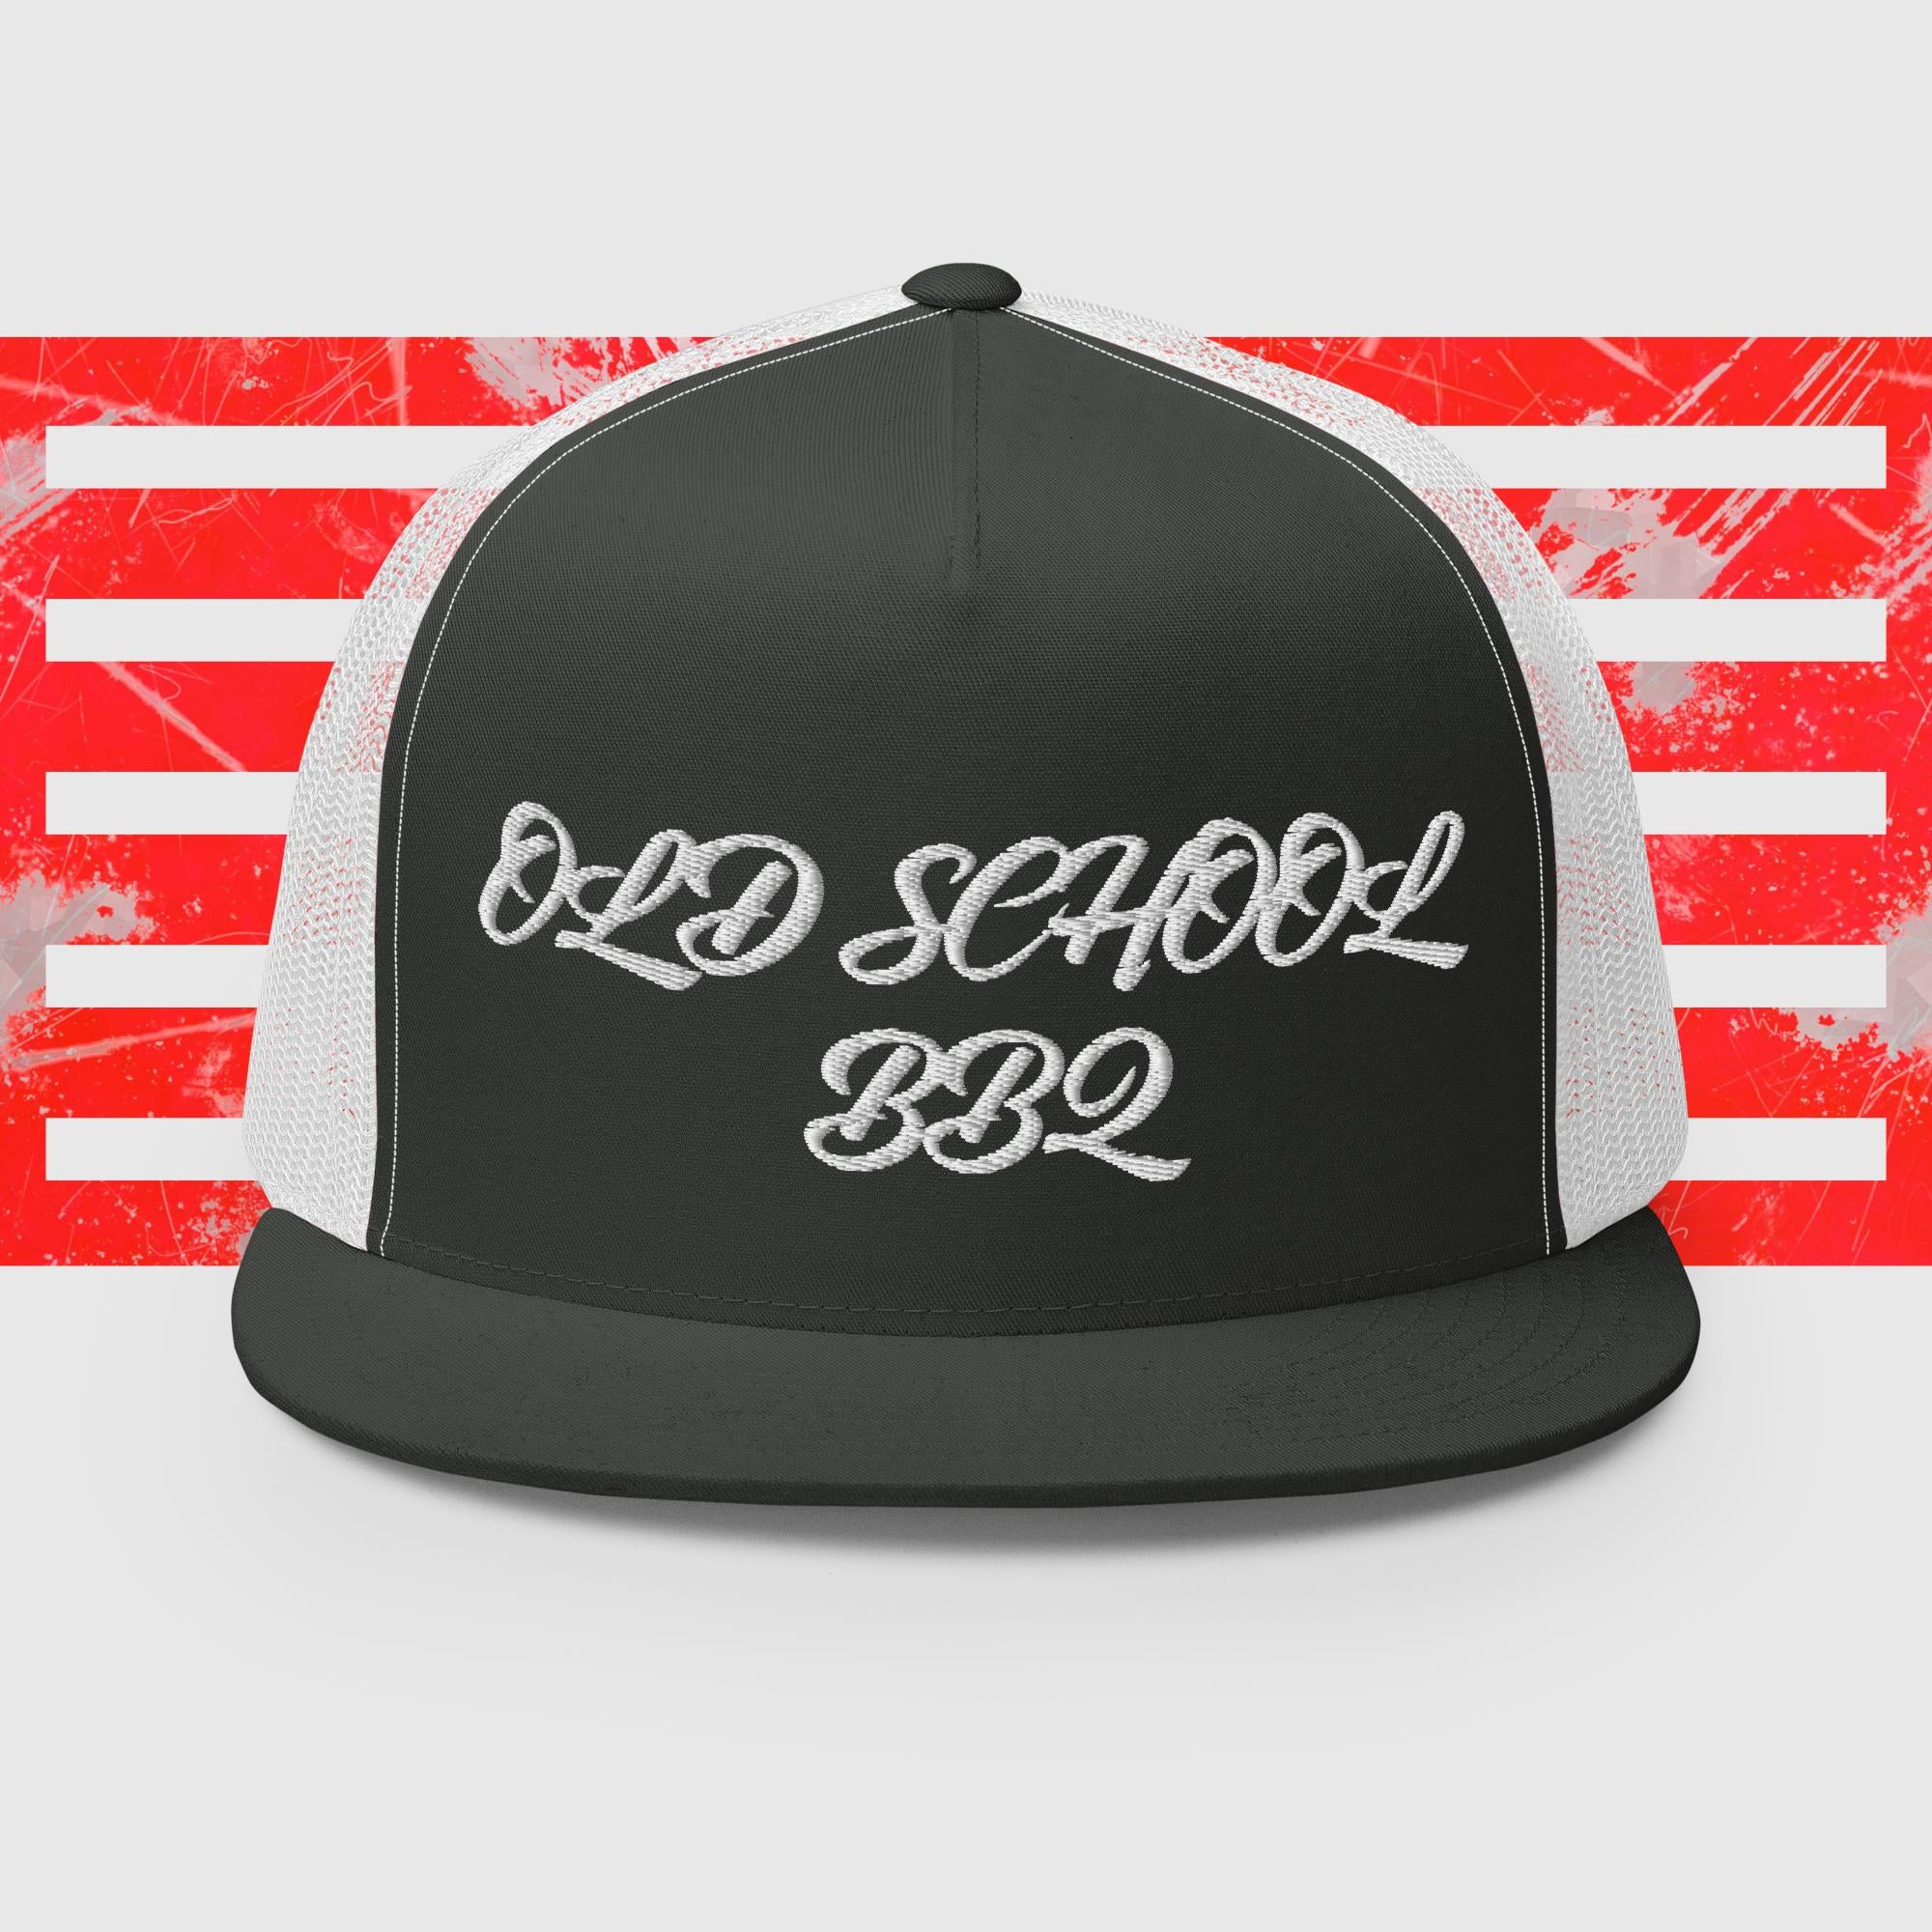 OLD SCHOOL BBQ TRUCKER HAT